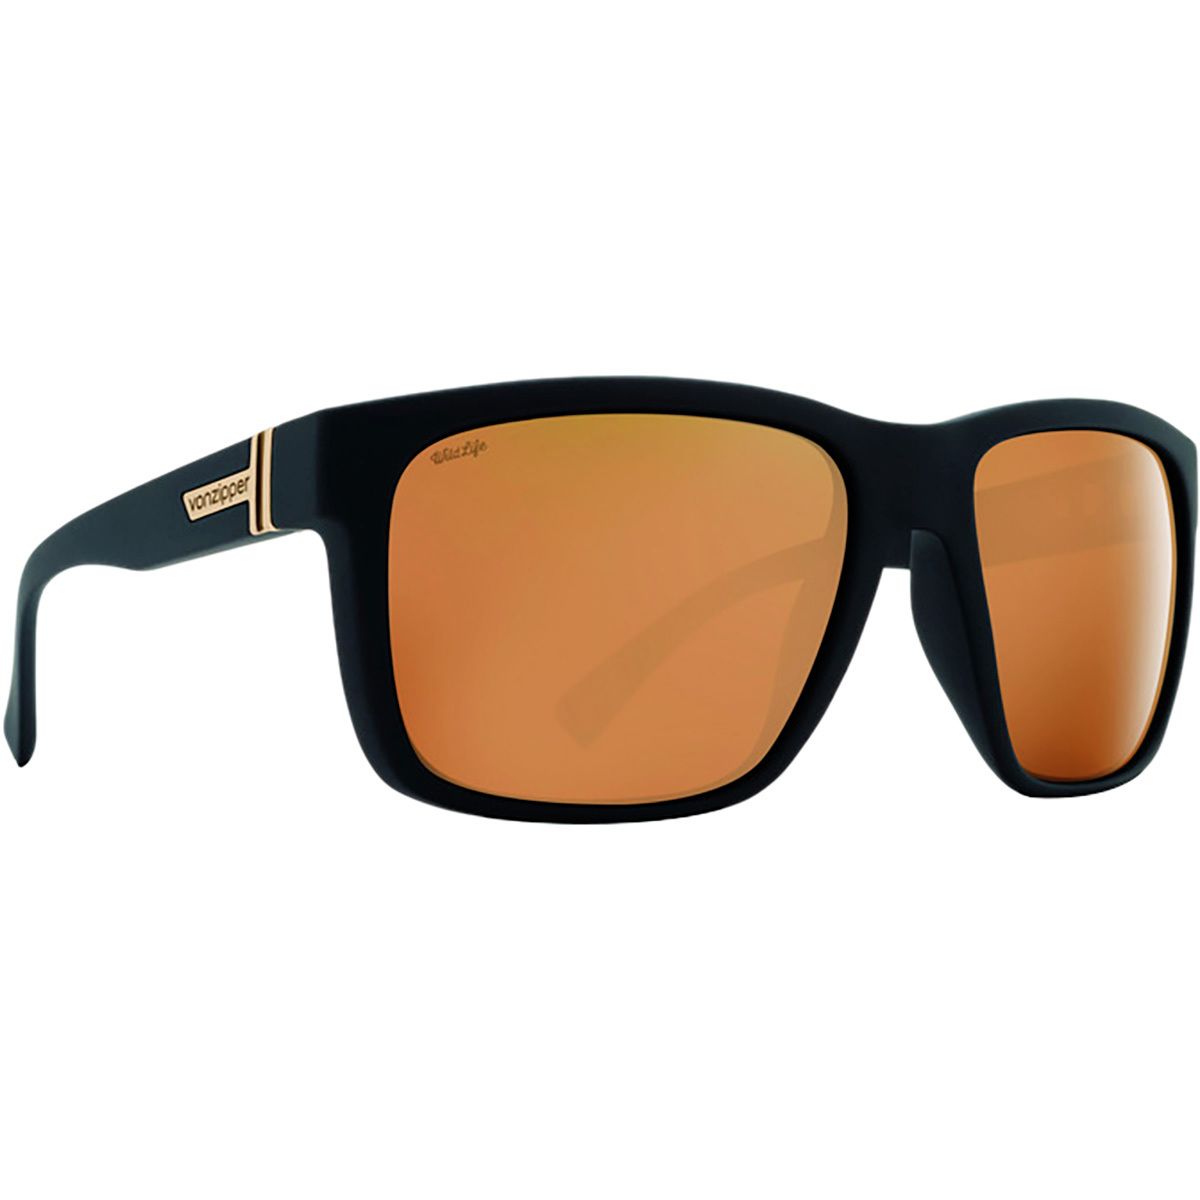 VonZipper Maxis Wildlife Polarized Sunglasses | eBay